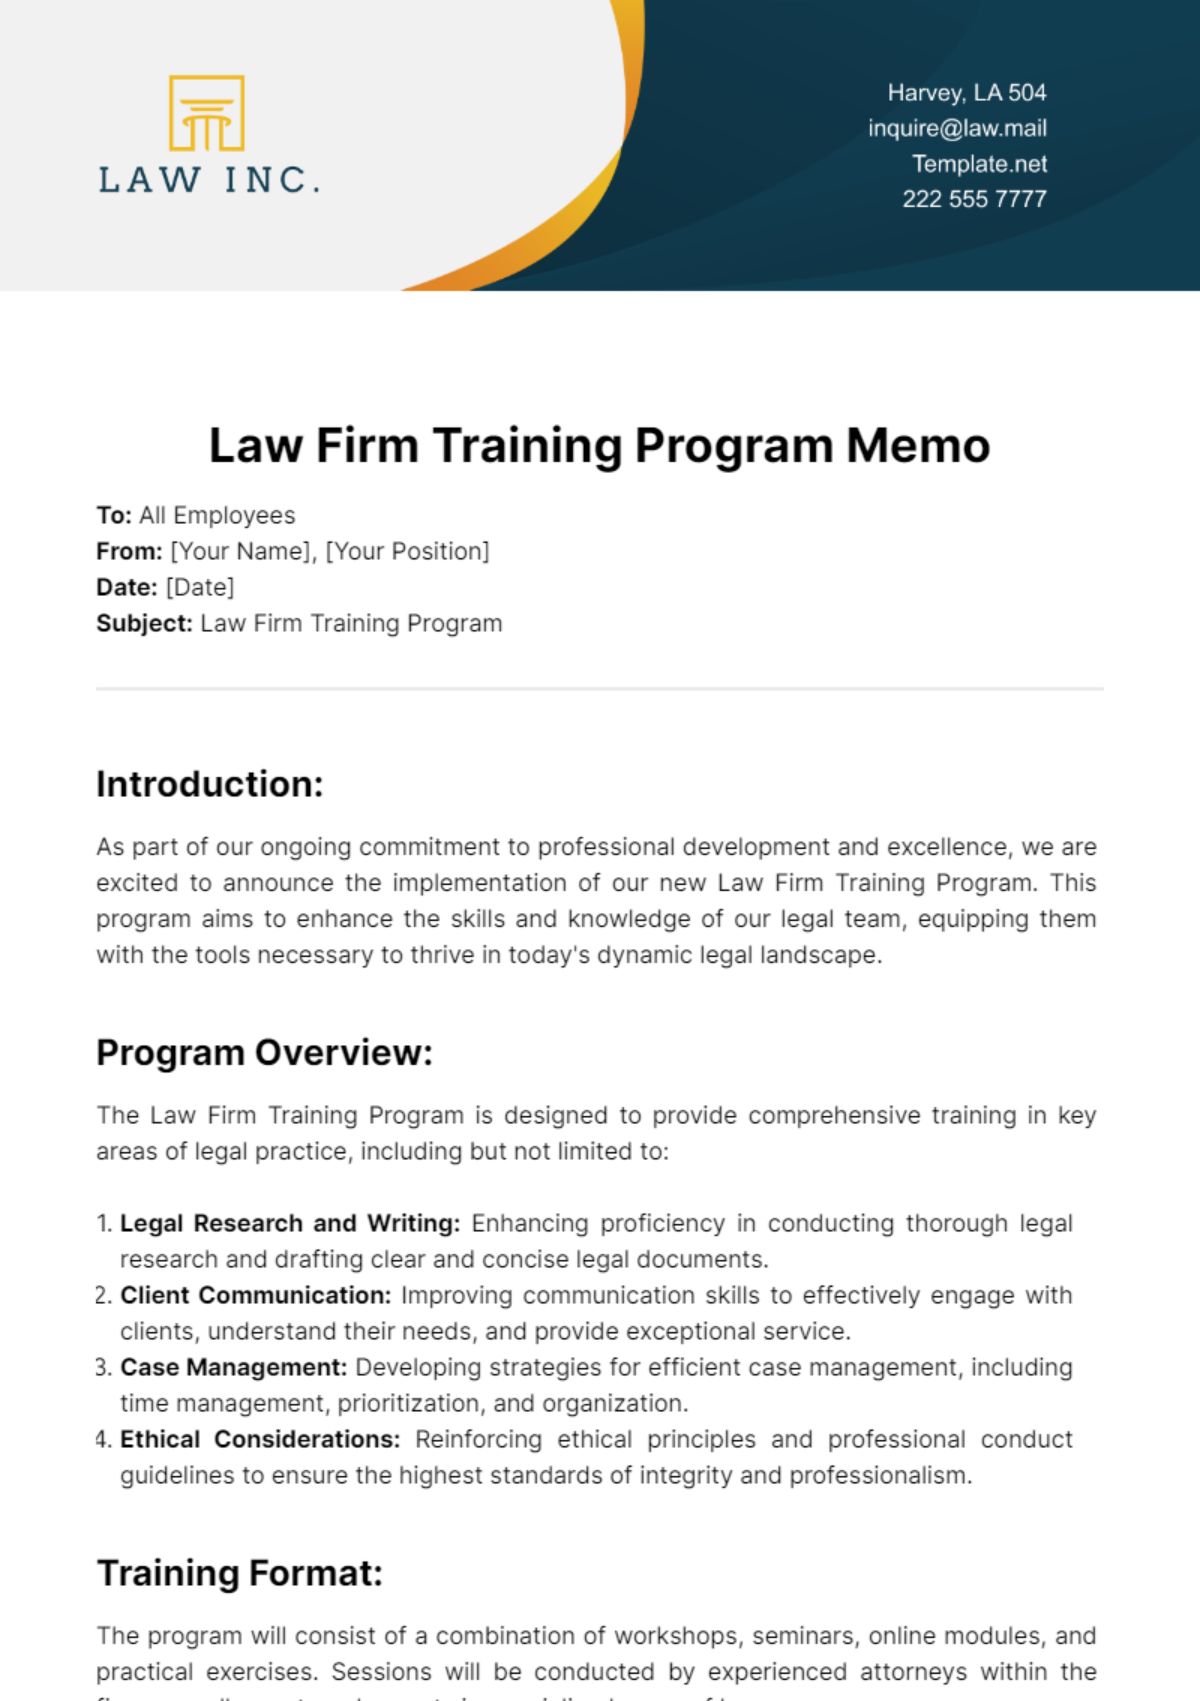 Law Firm Training Program Memo Template